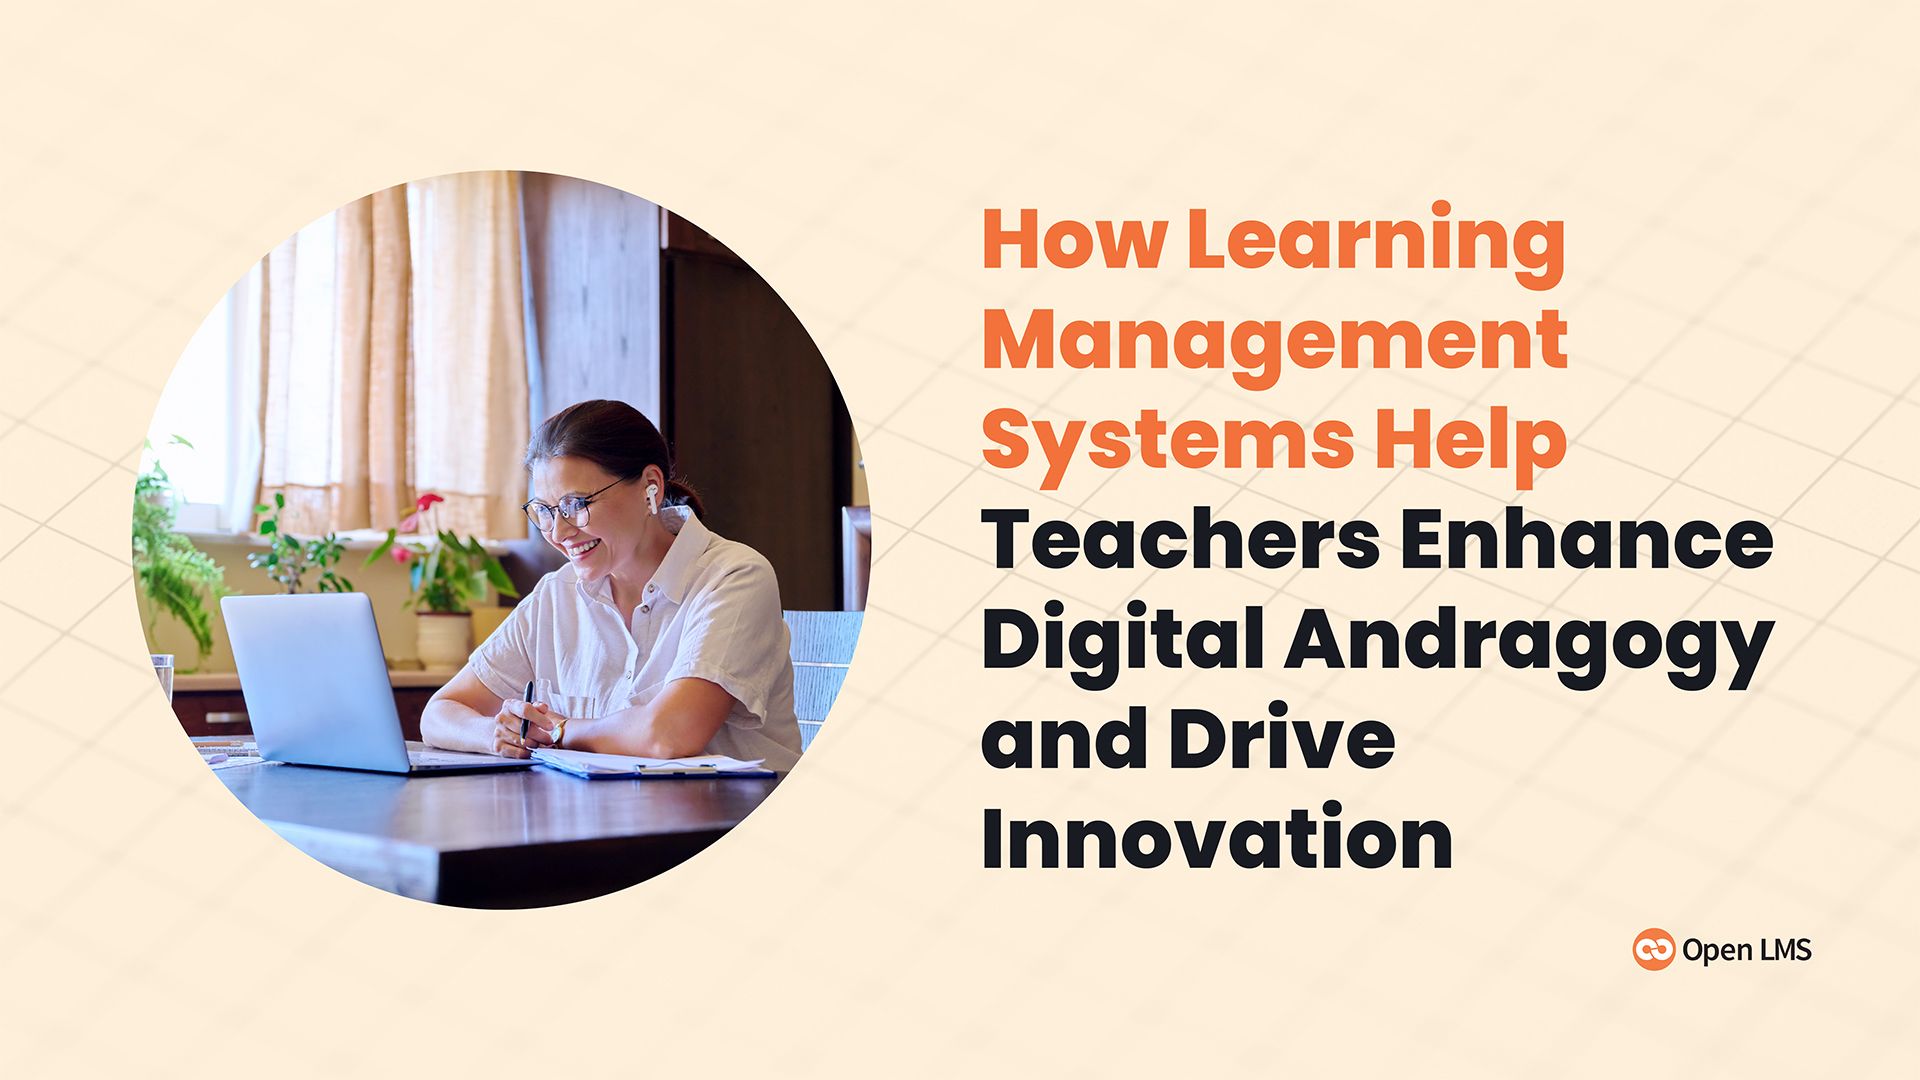 How Learning Management Systems Help Teachers Enhance Digital Andragogy and Drive Innovation